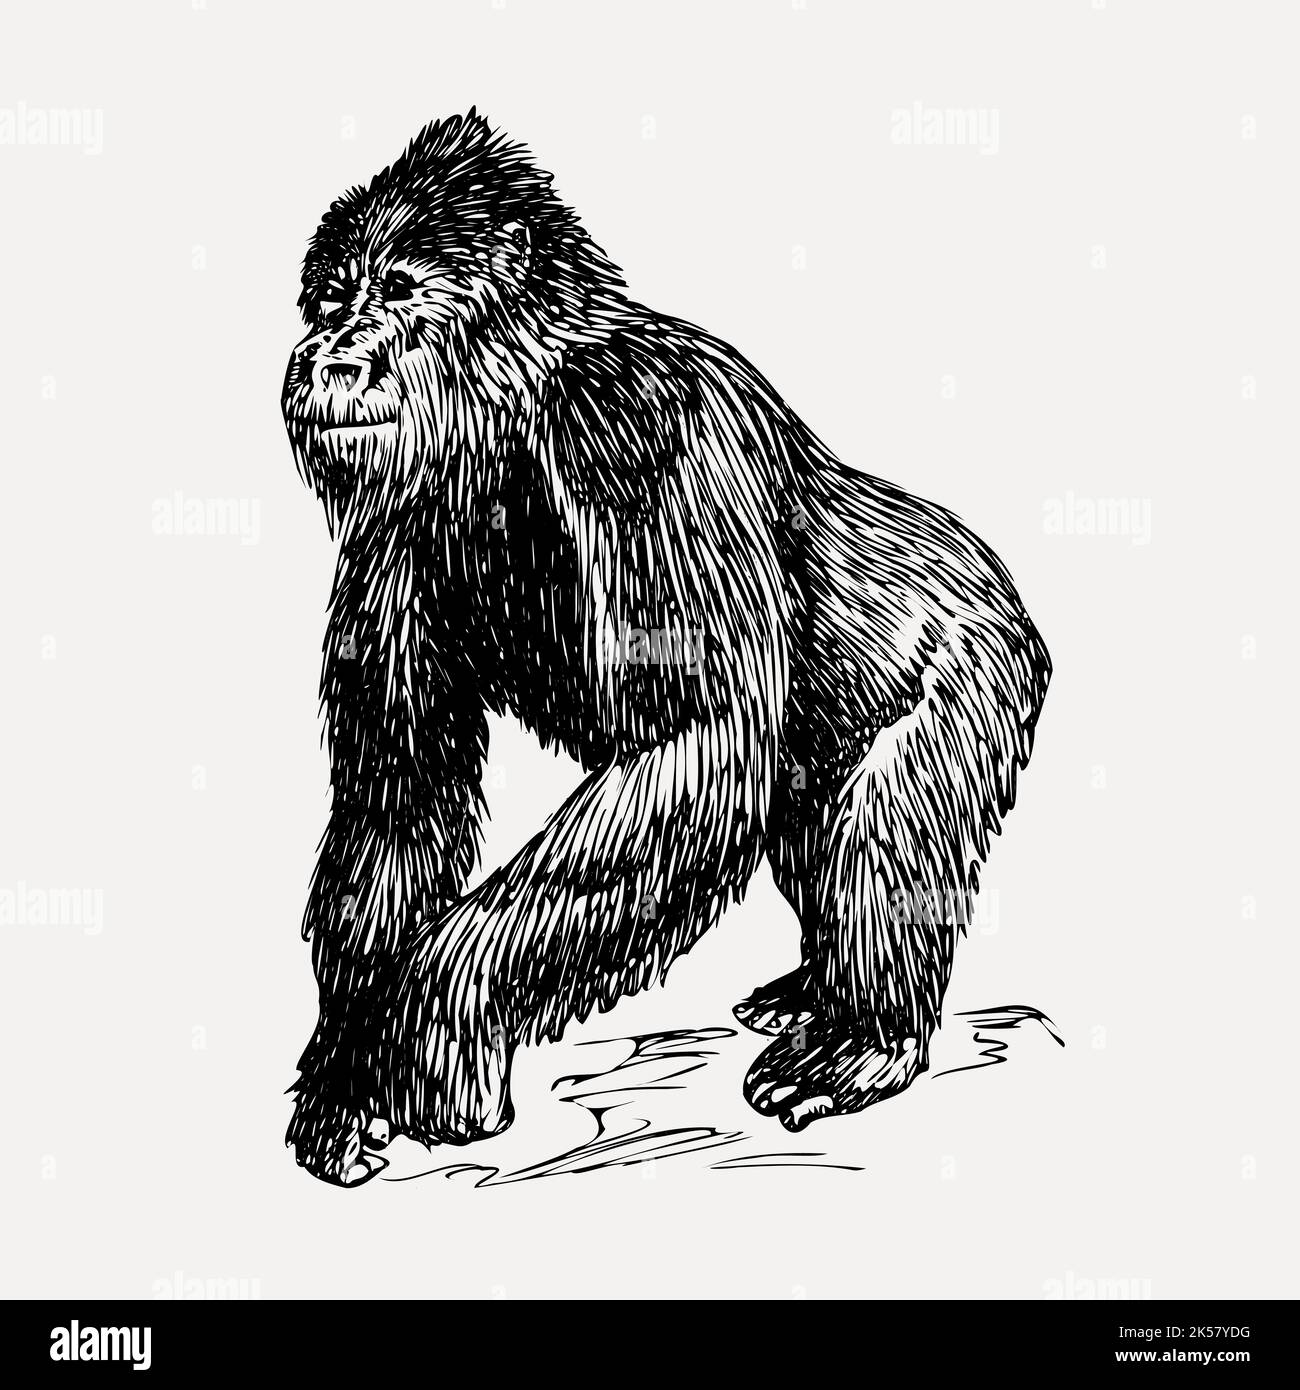 gorilla, gorilla vevtor, vintage wildlife illustration, wildlife vintage, gorilla drawing, animals, antique, art, artwork, black and white, bw, Stock Vector